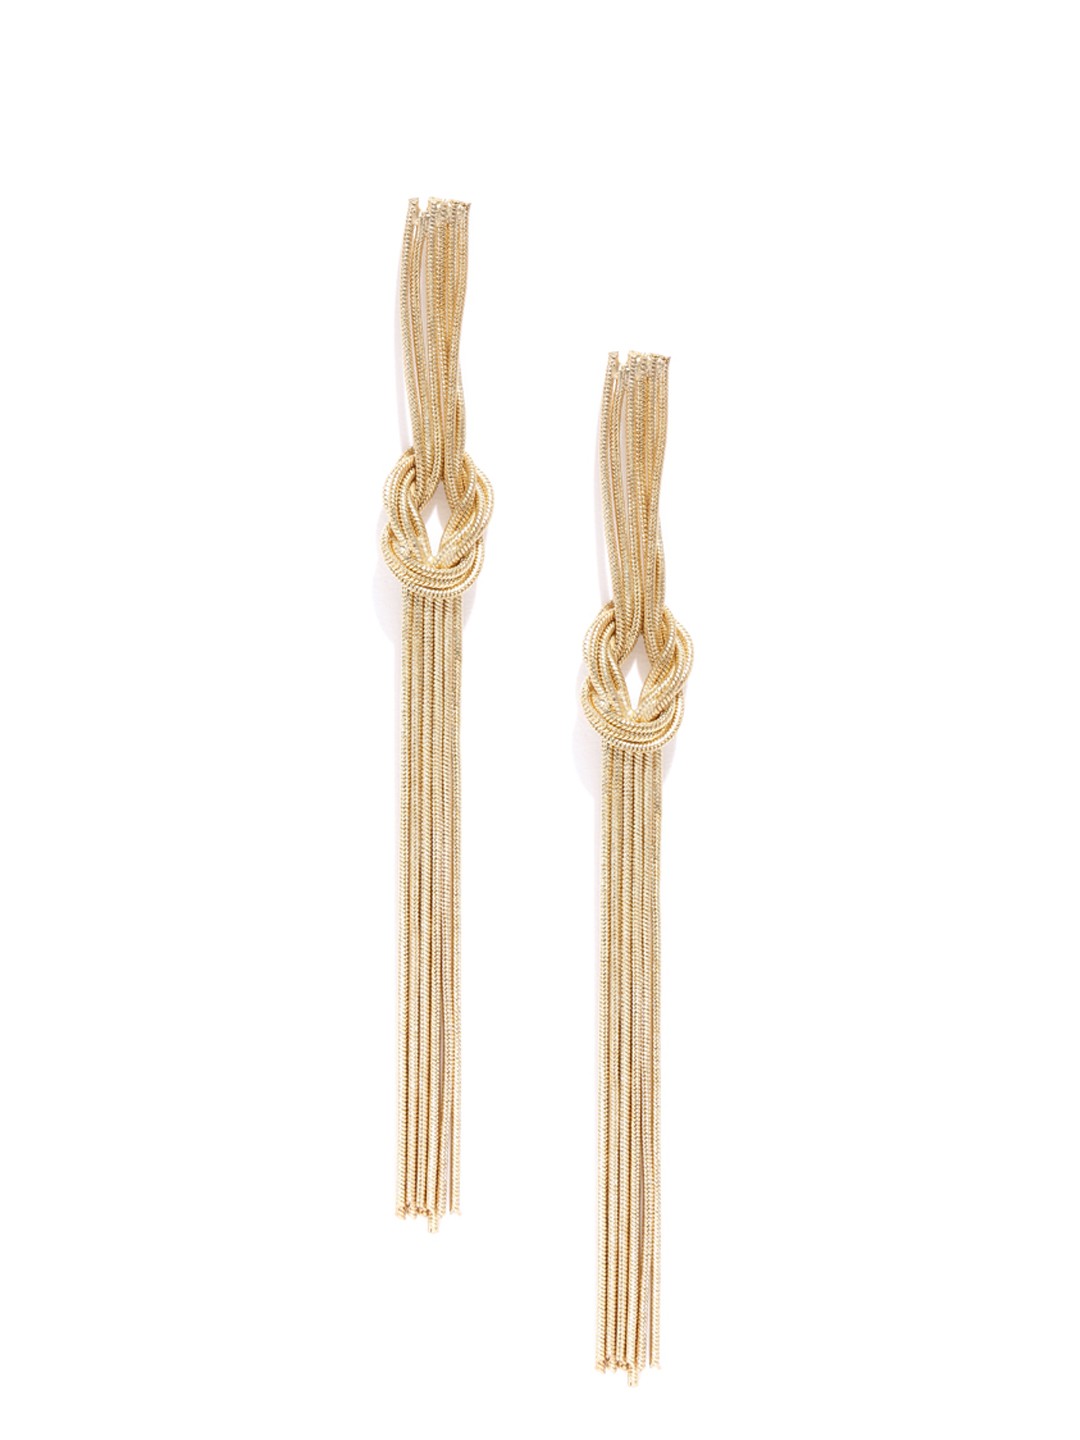 Accessorize Gold-Toned Multistranded Drop Earrings